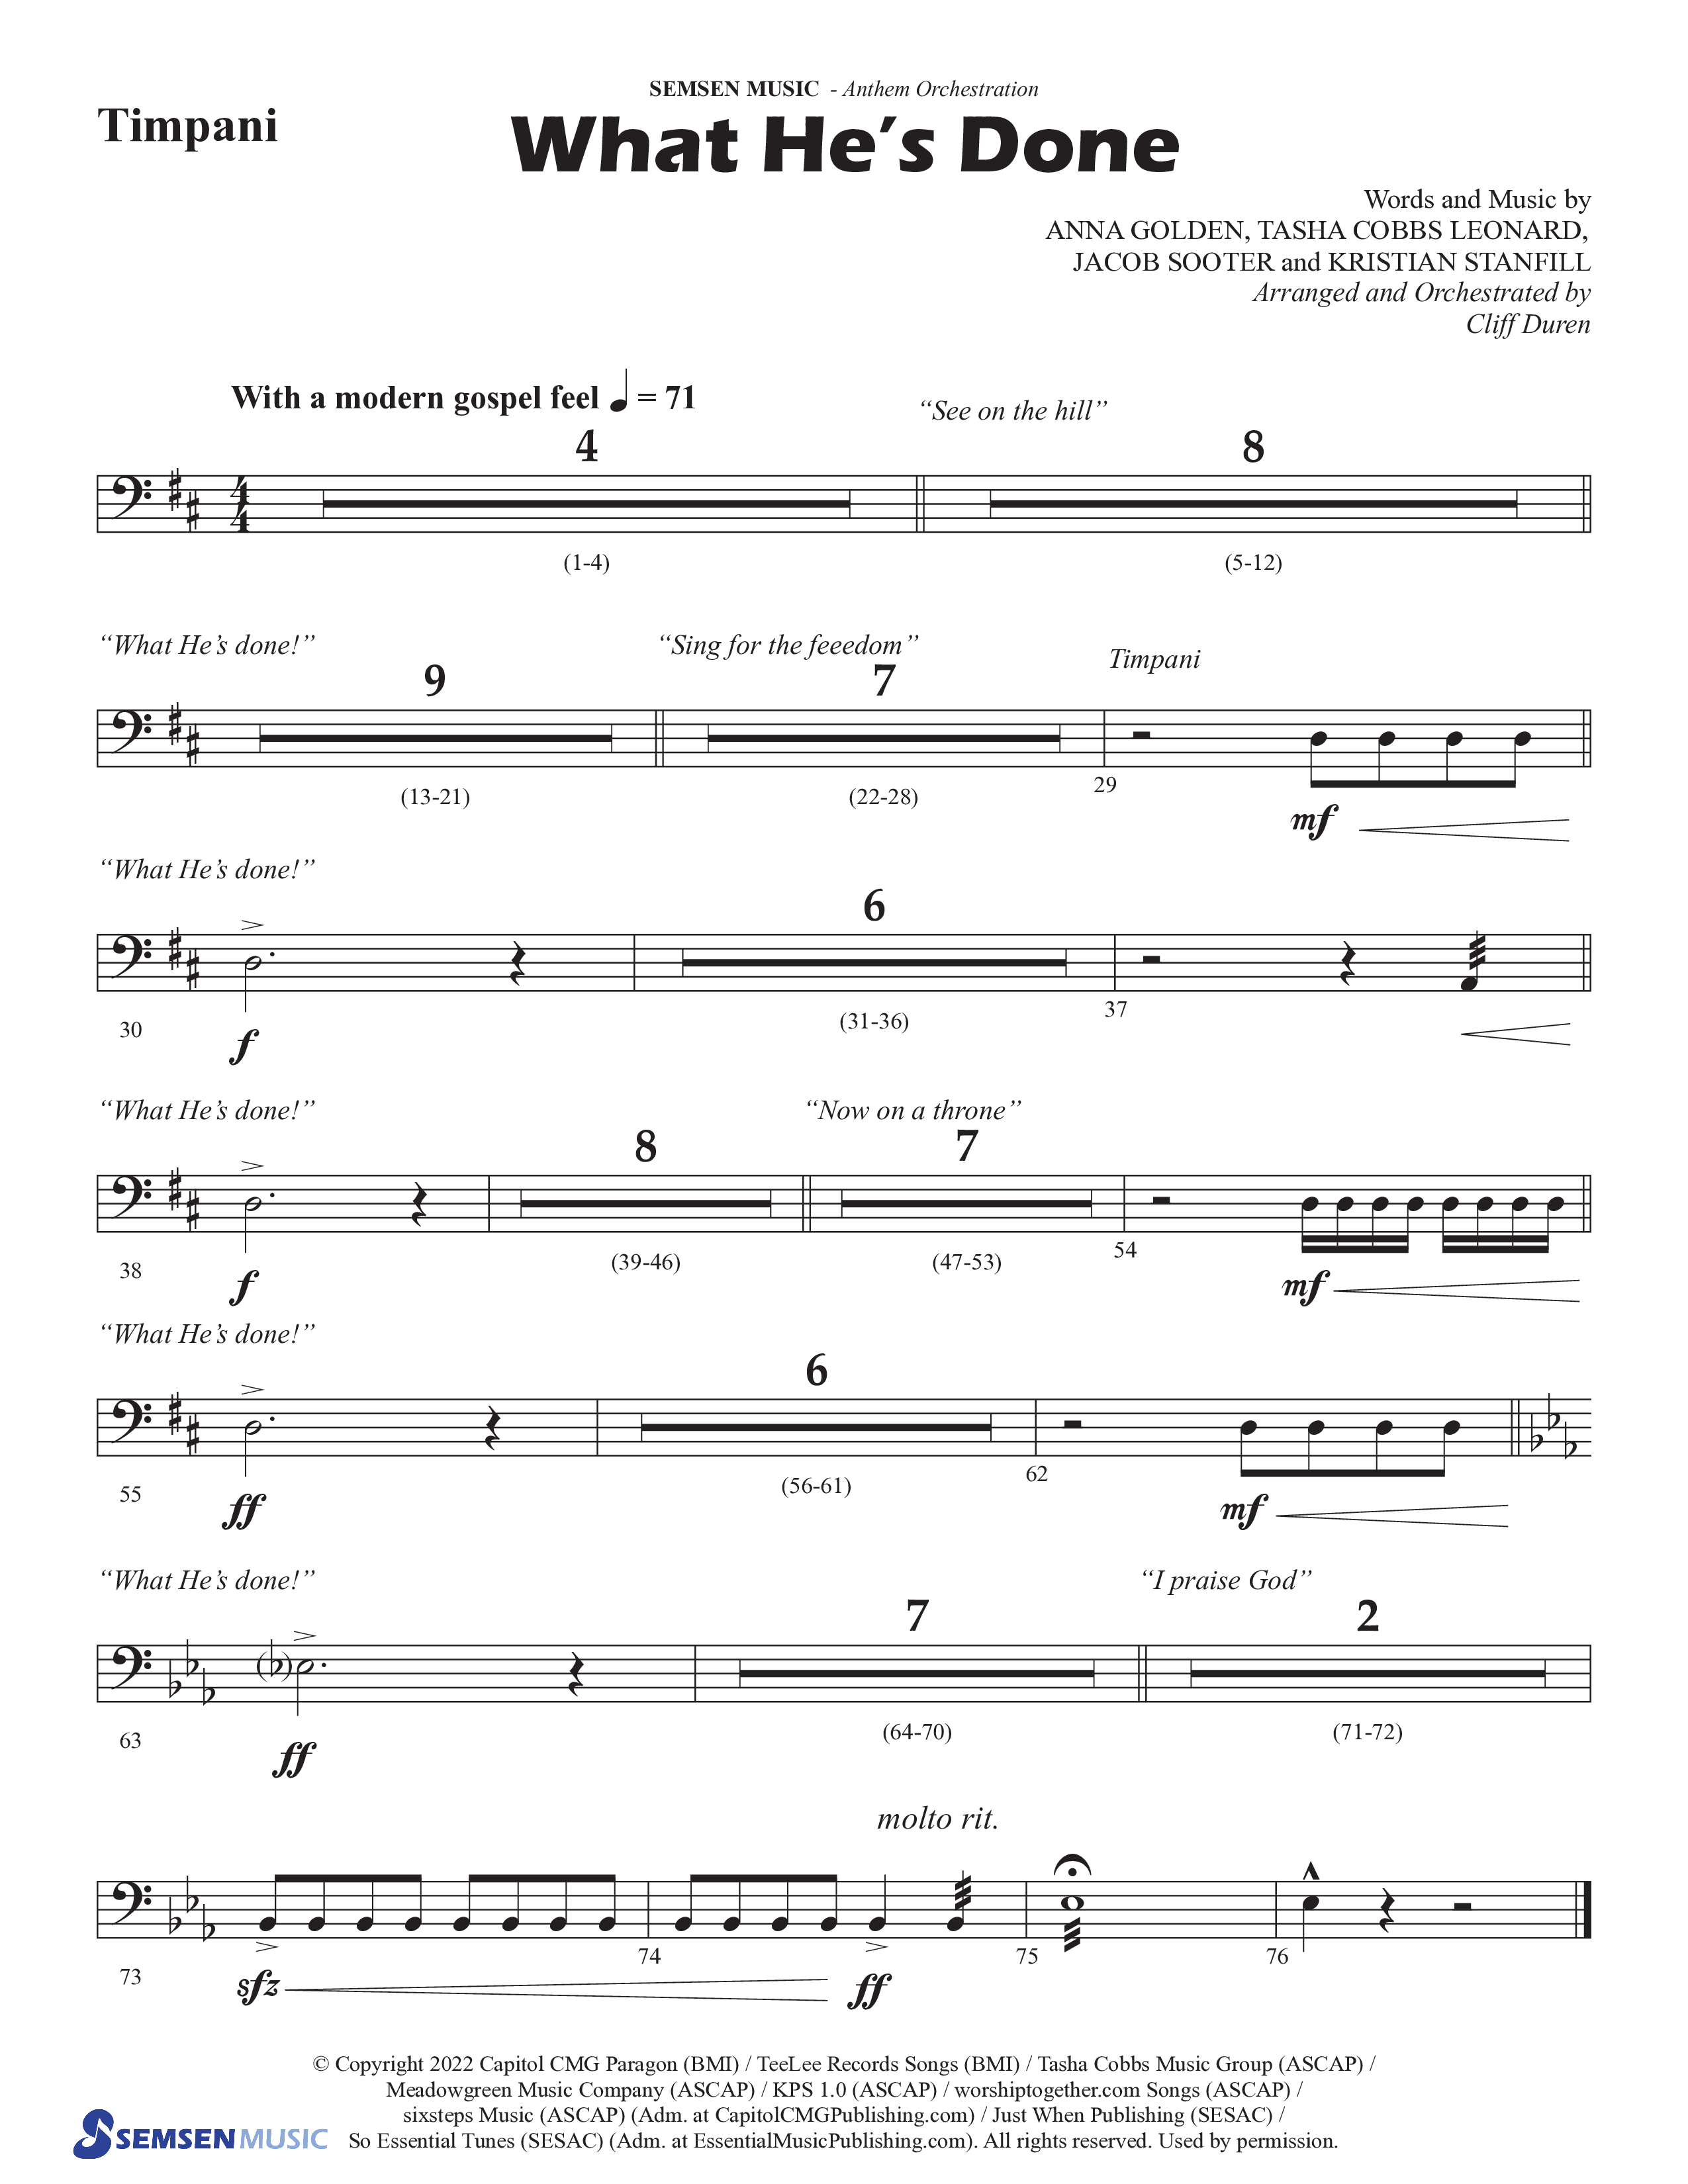 What He's Done (Choral Anthem SATB) Timpani (Semsen Music / Arr. Cliff Duren)